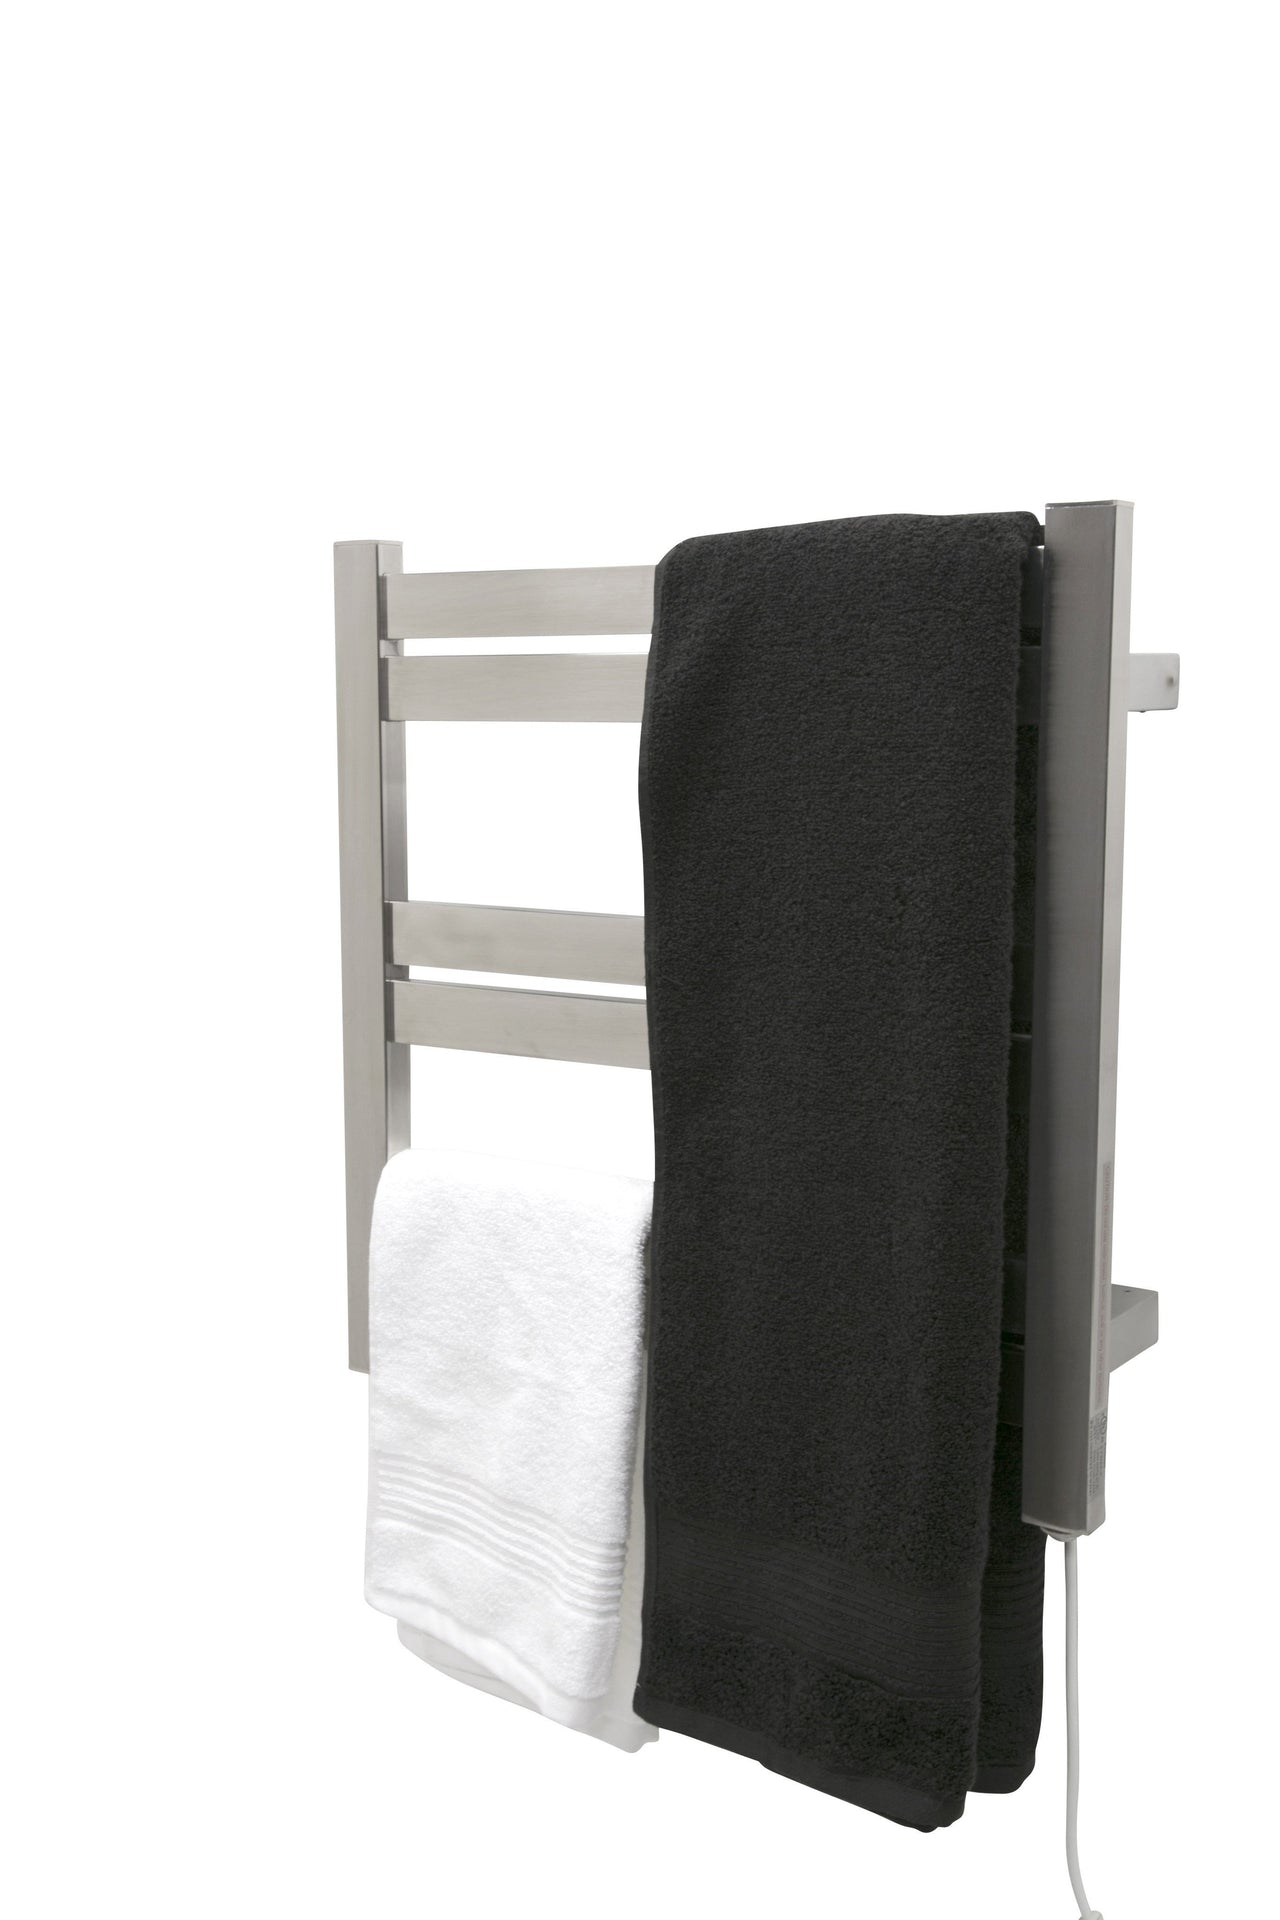 ANZZI Starling TW-AZ025BN Towel Warmers Towel Warmers ANZZI 